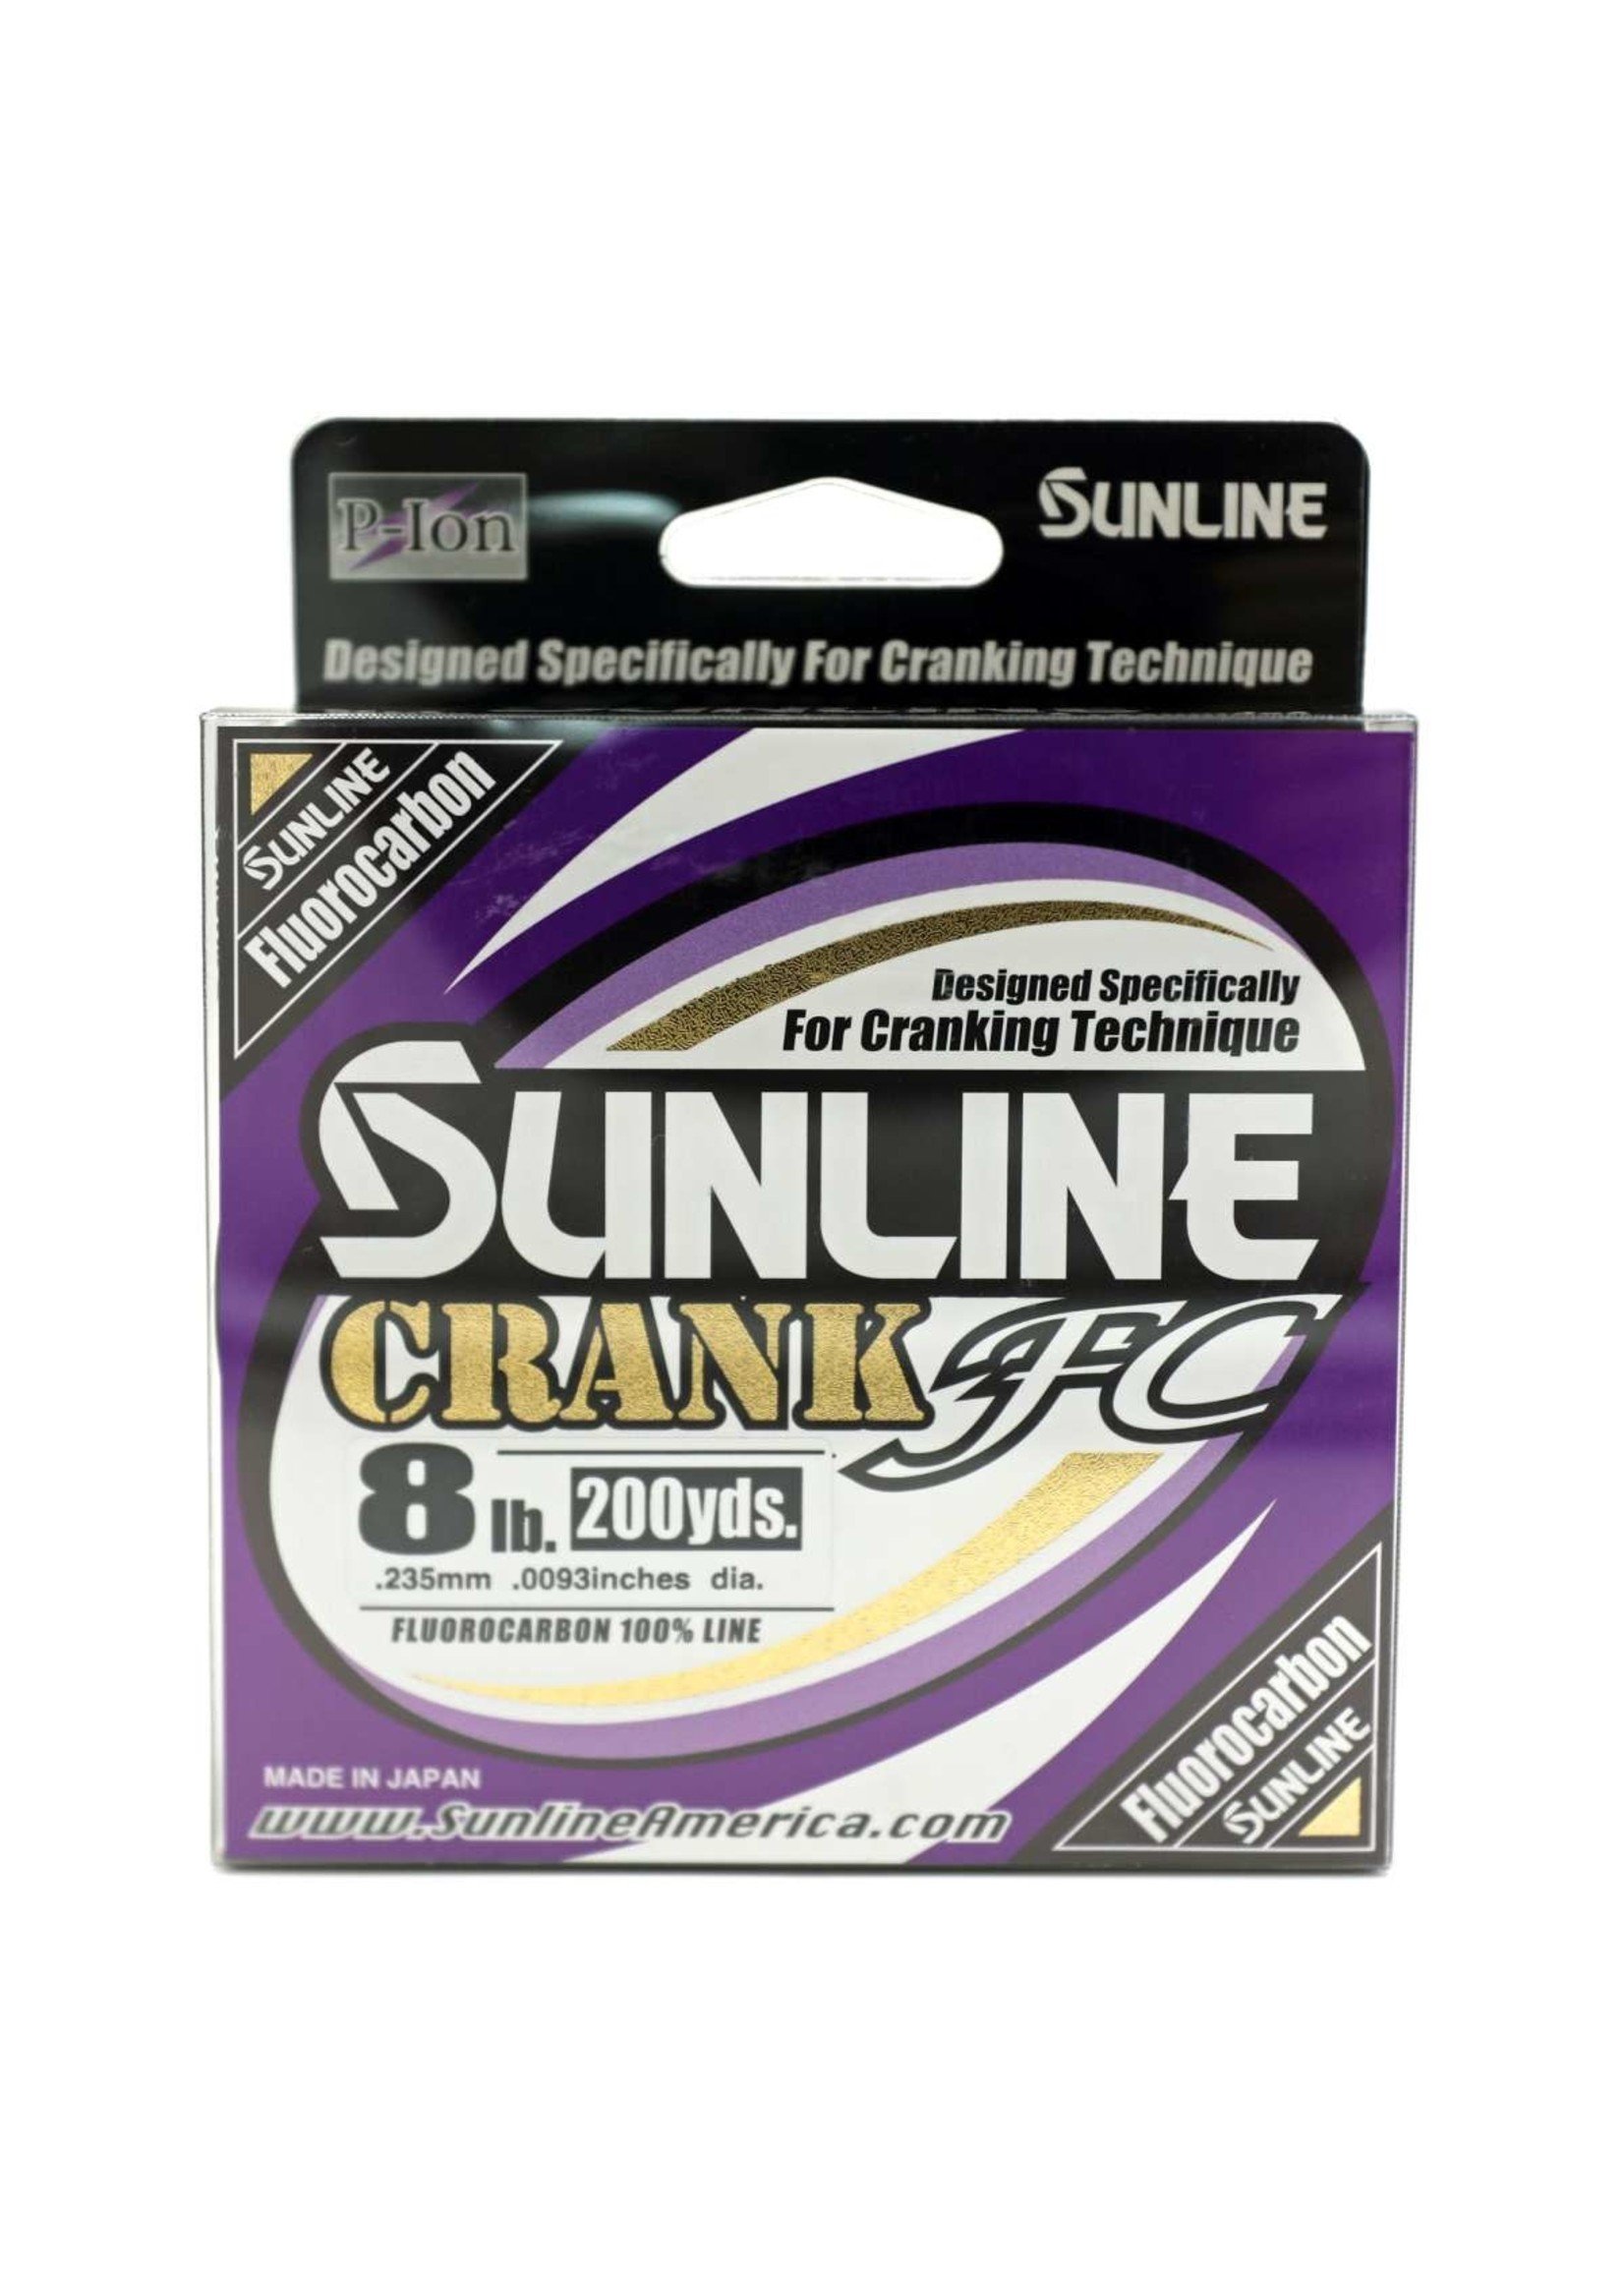 Sunline Crank FC 200 yard